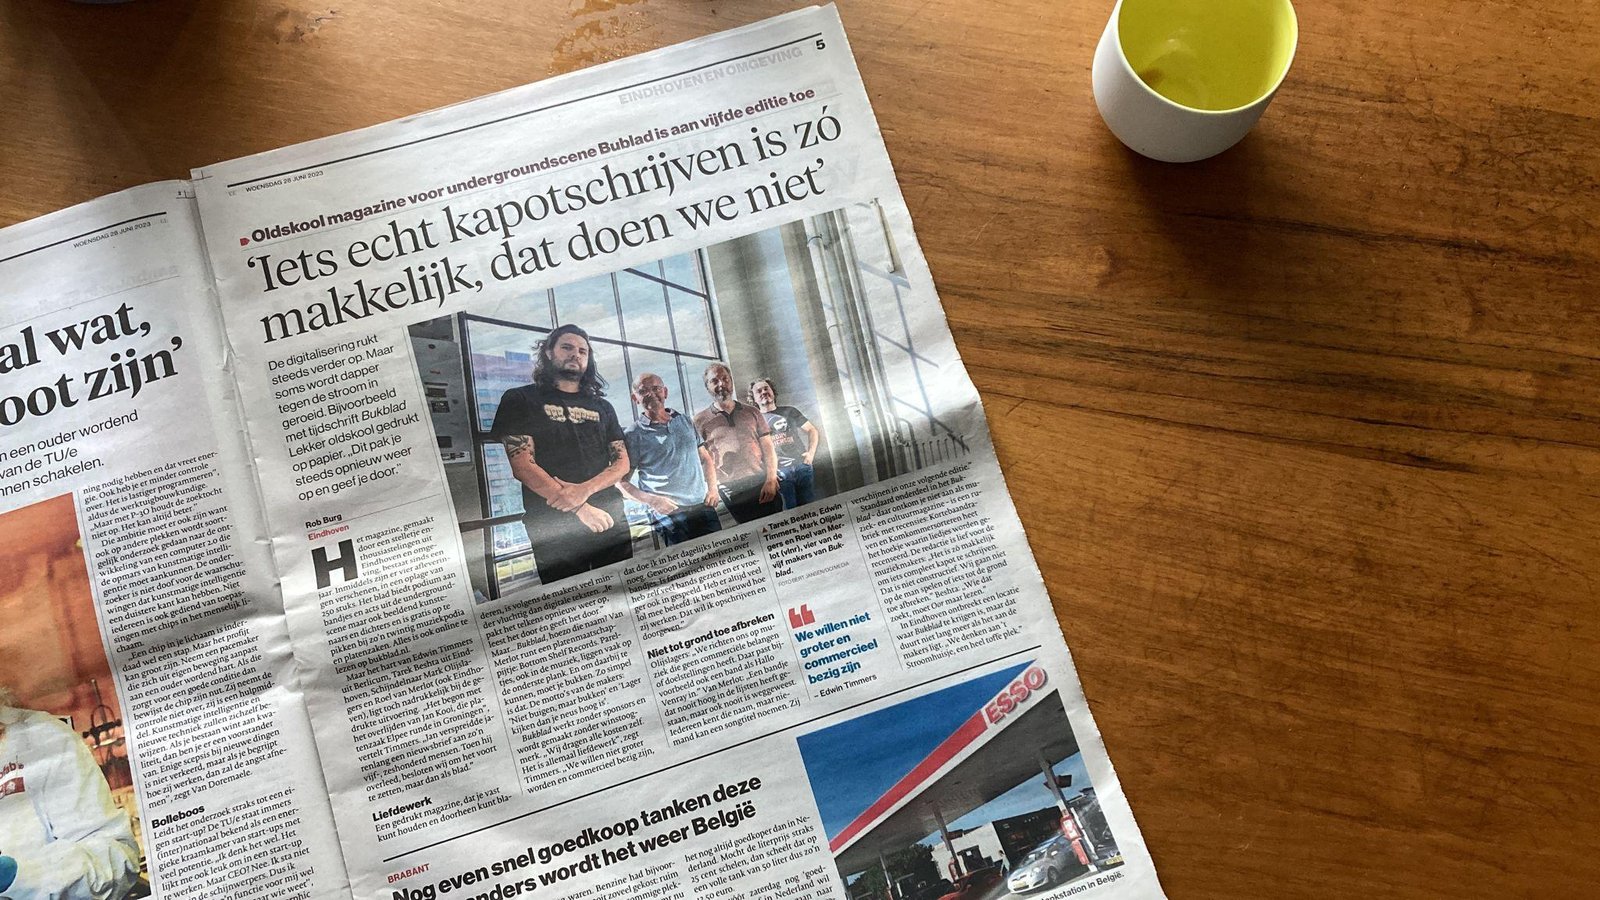 Bukblad eindhovensdagblad